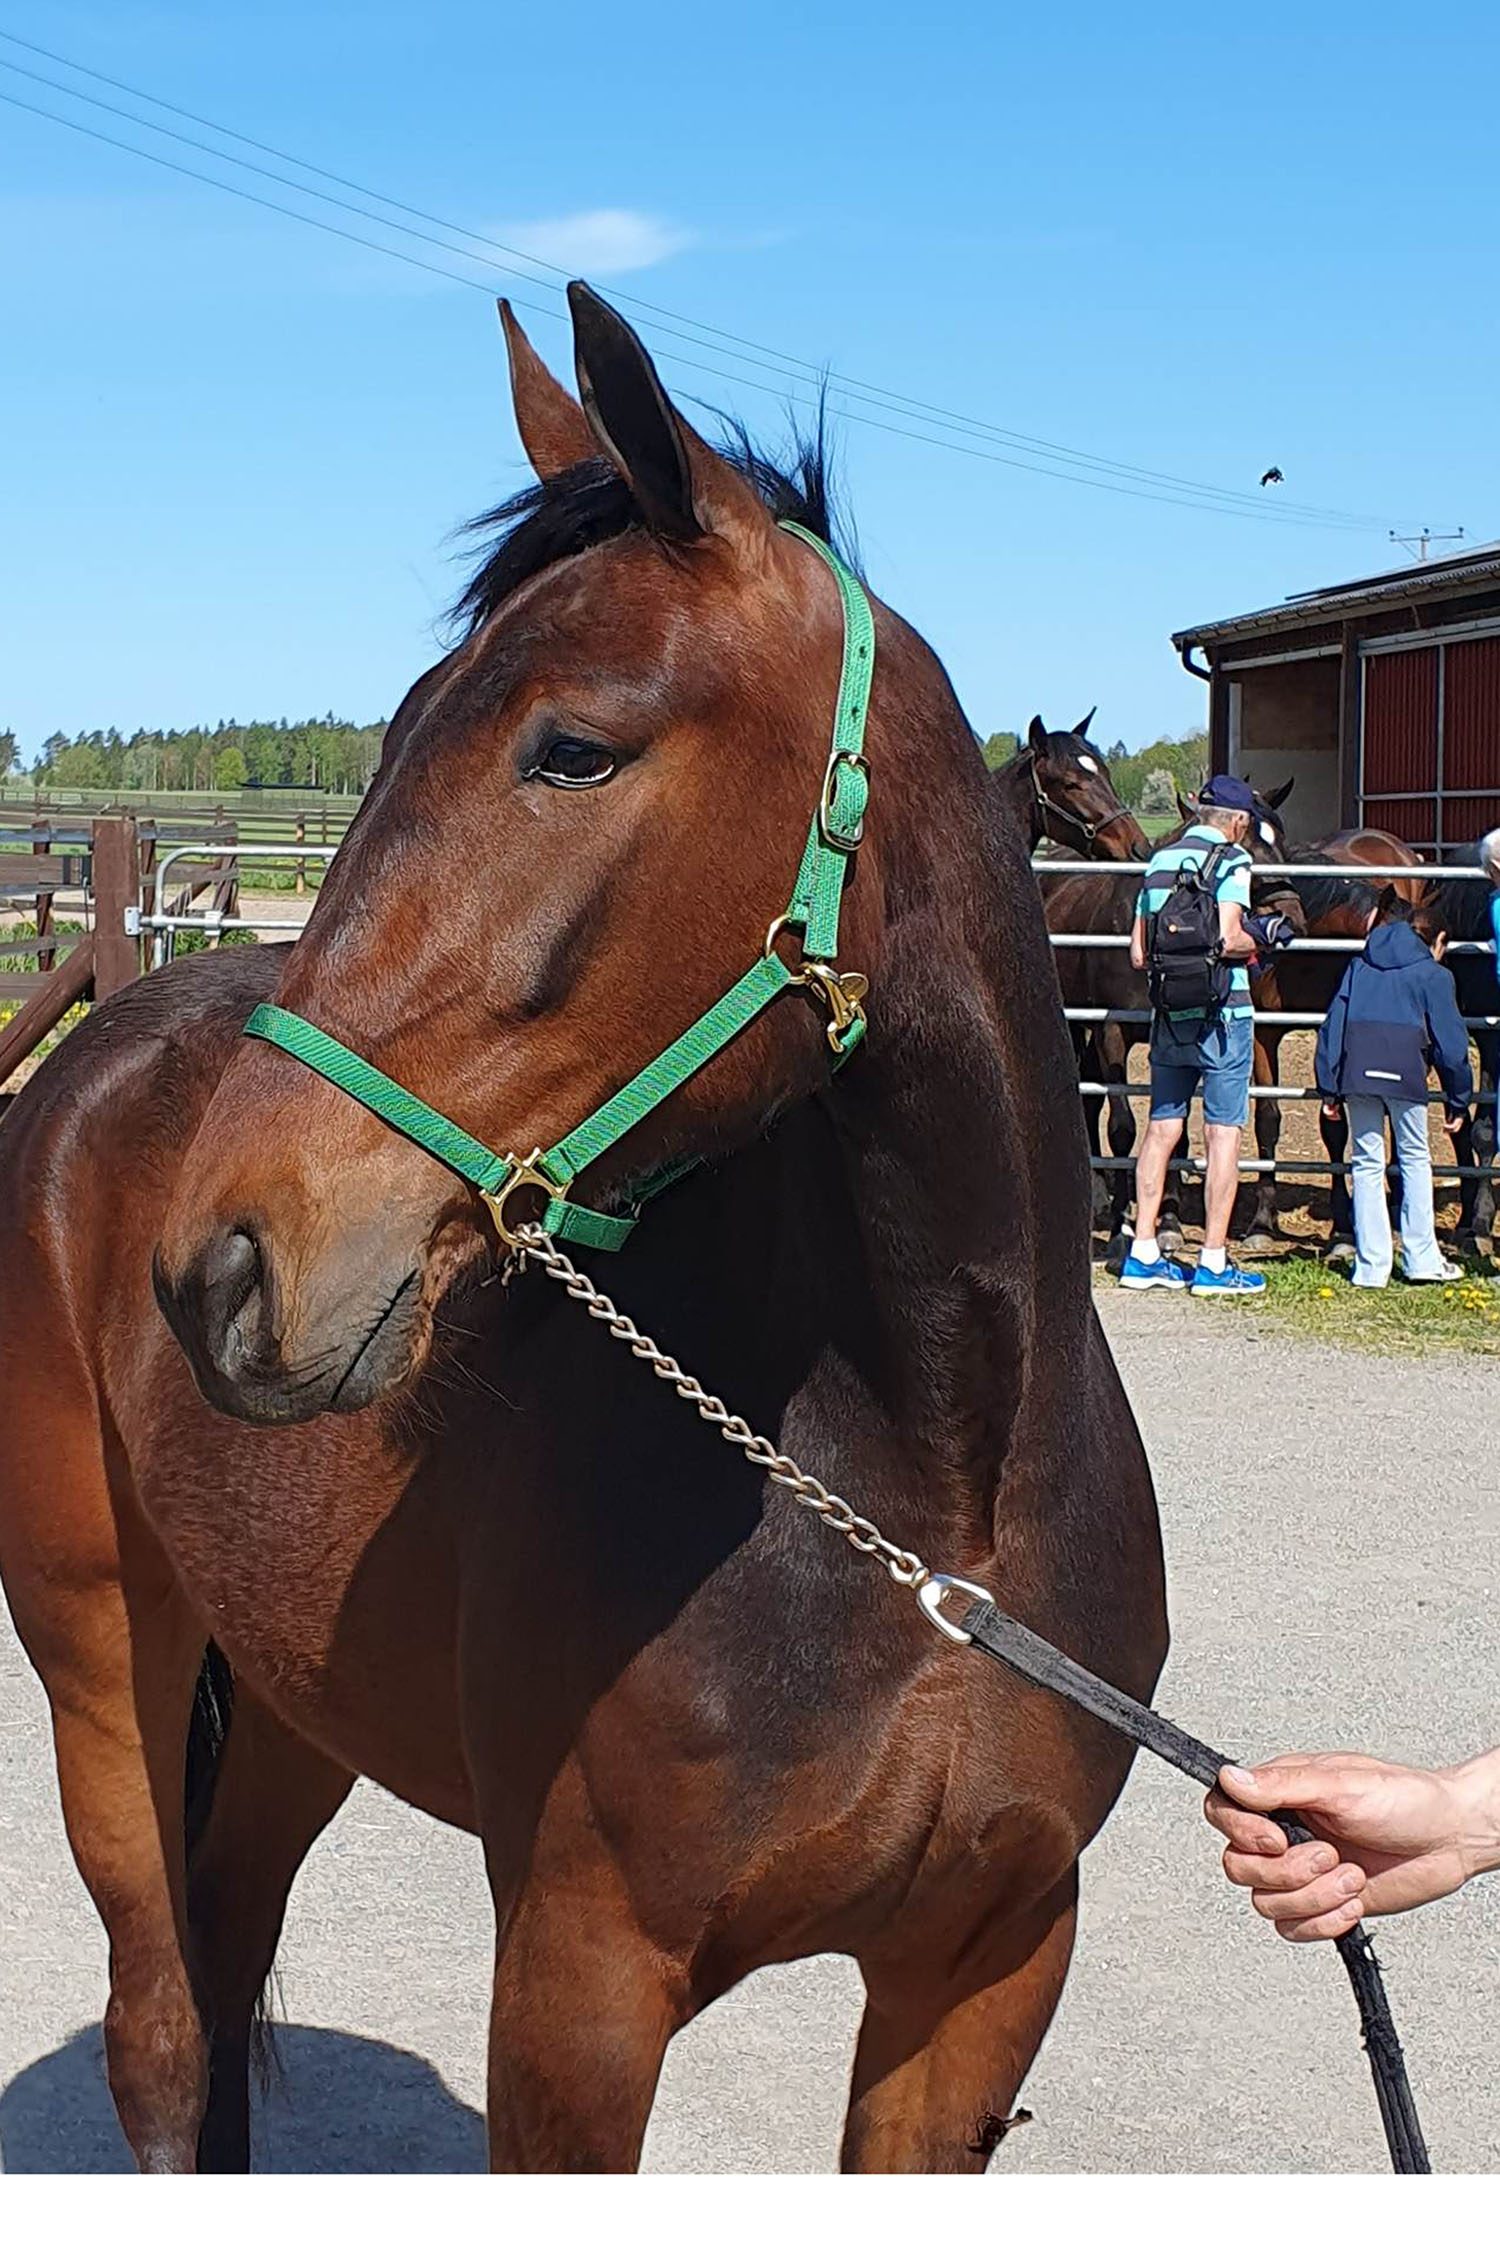 Stallets nya häst, G.B.G Postponed kikade sig nyfiket omkring. Foto: A.Lindblom